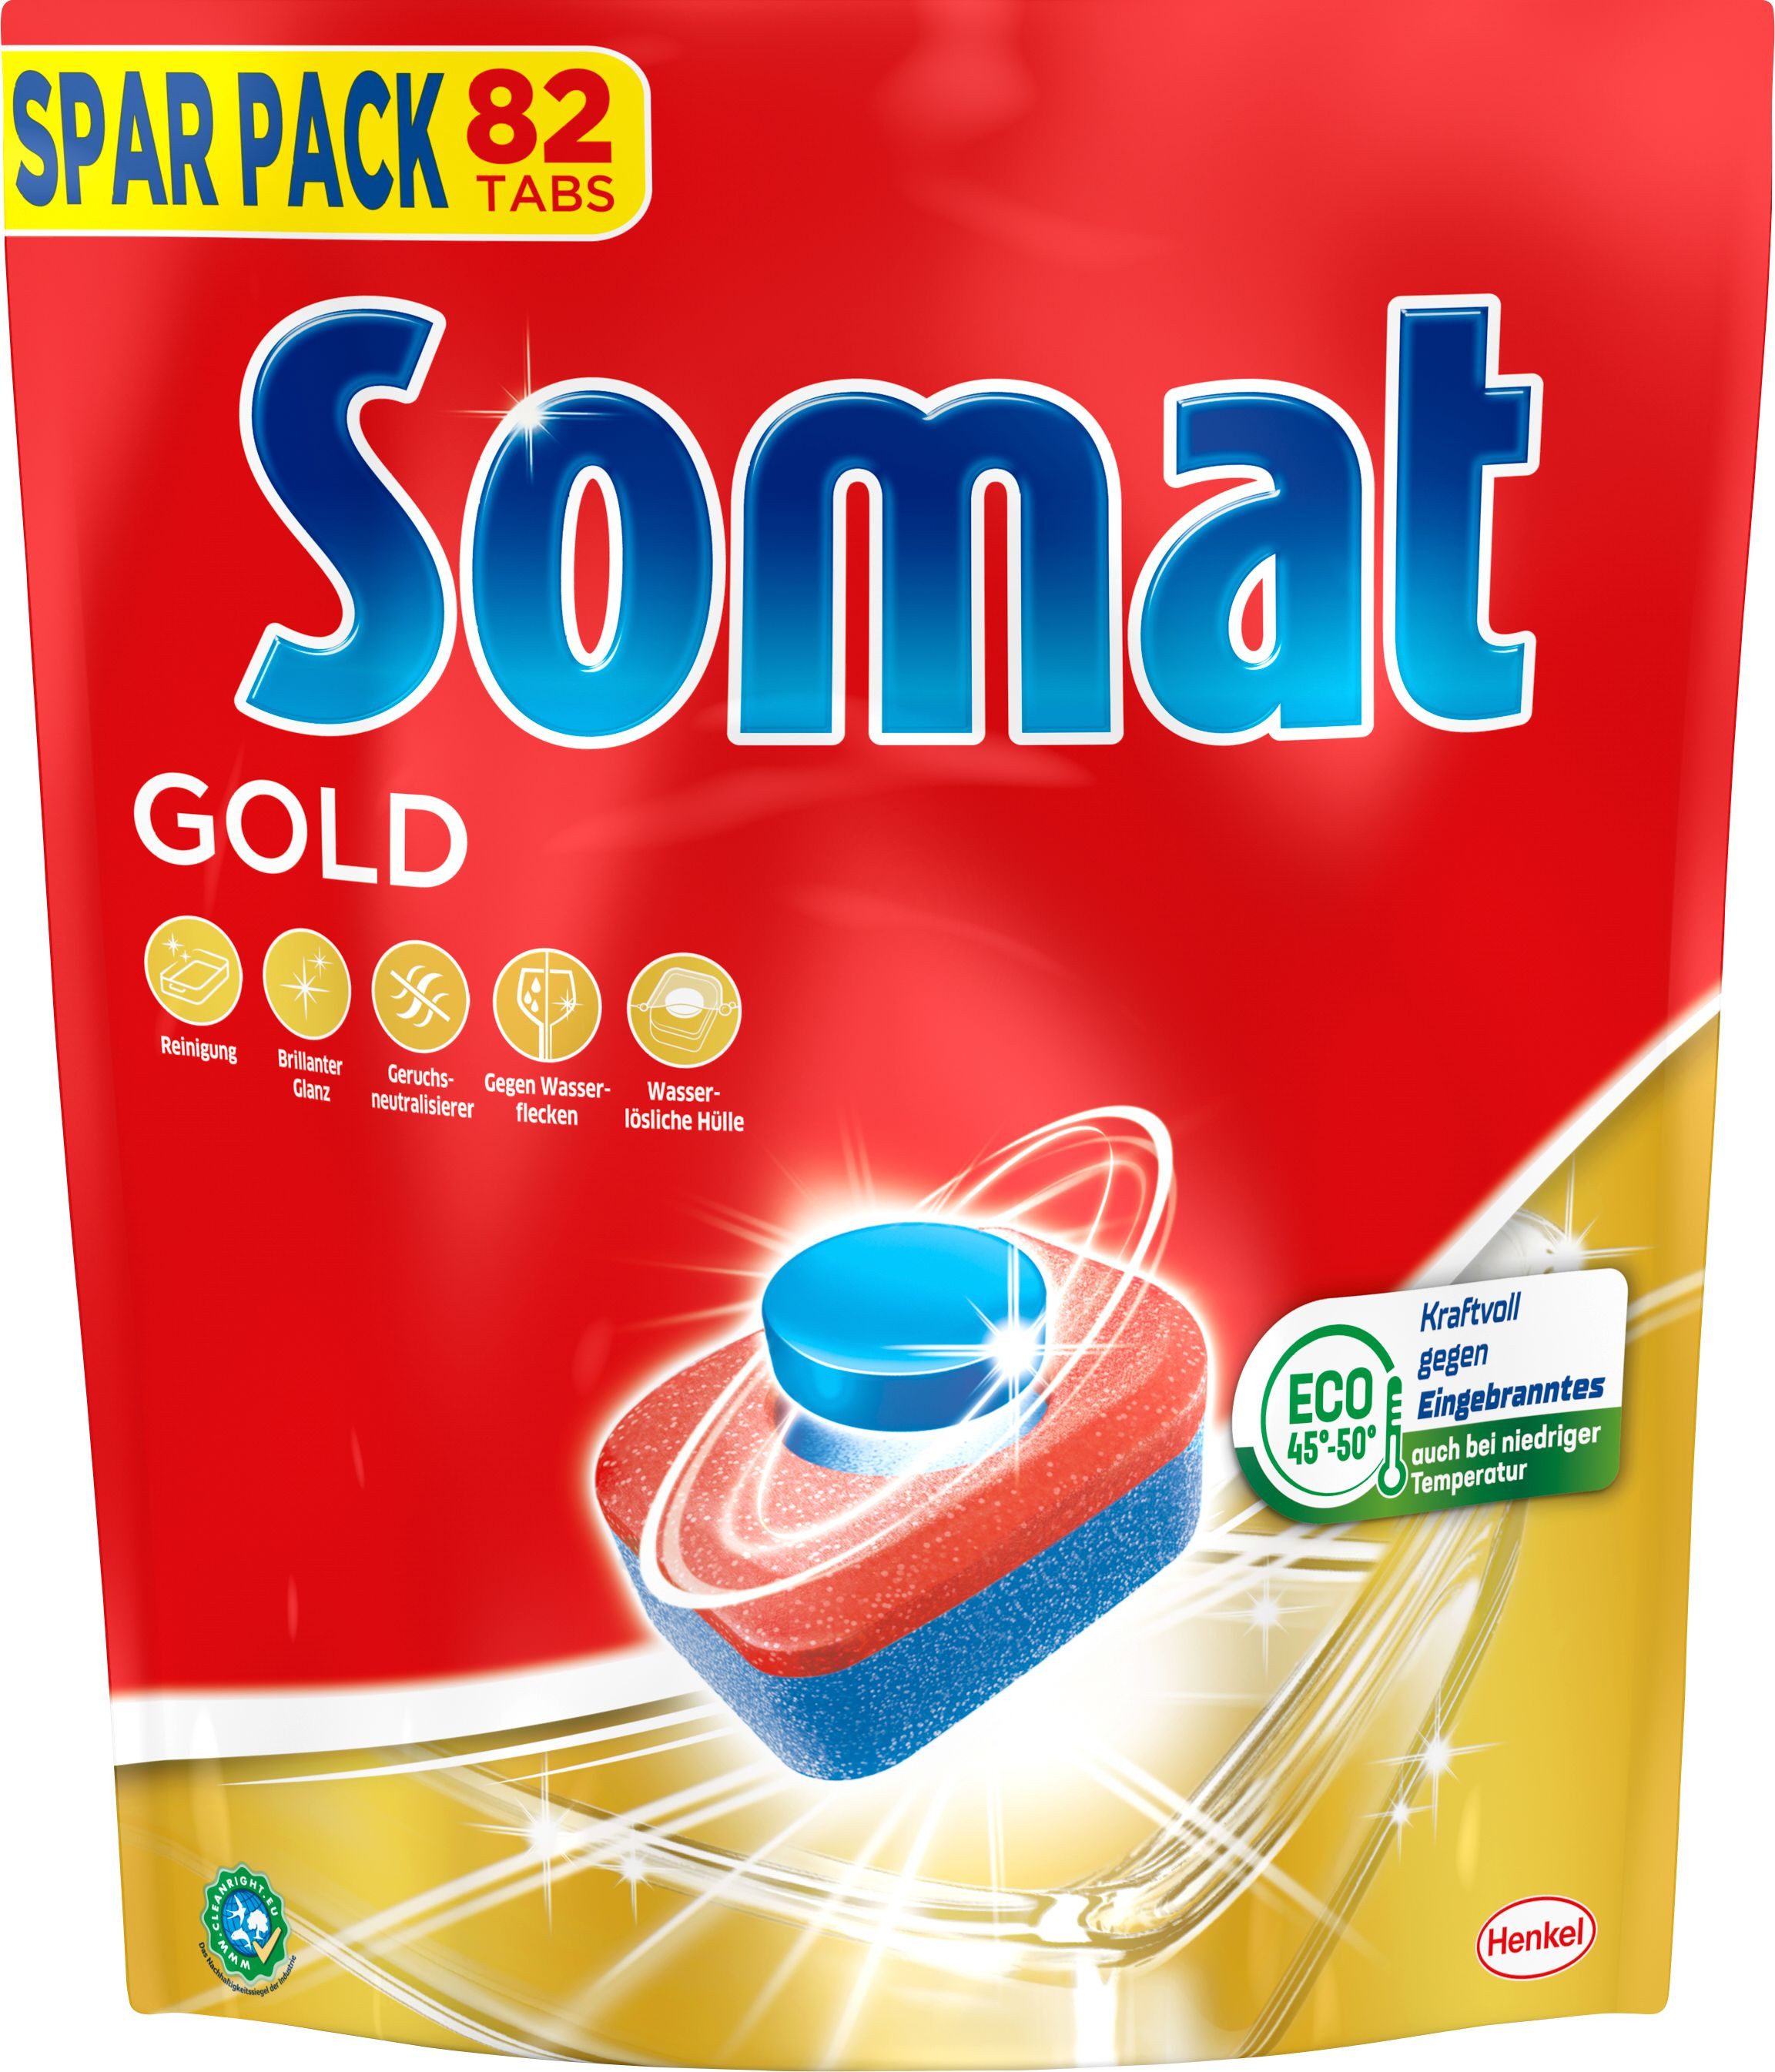 Somat Gold 82 AW Spülmaschinentabs (Spar Pack, [82-St. mit extra Kraft gegen Eingetrocknetes)